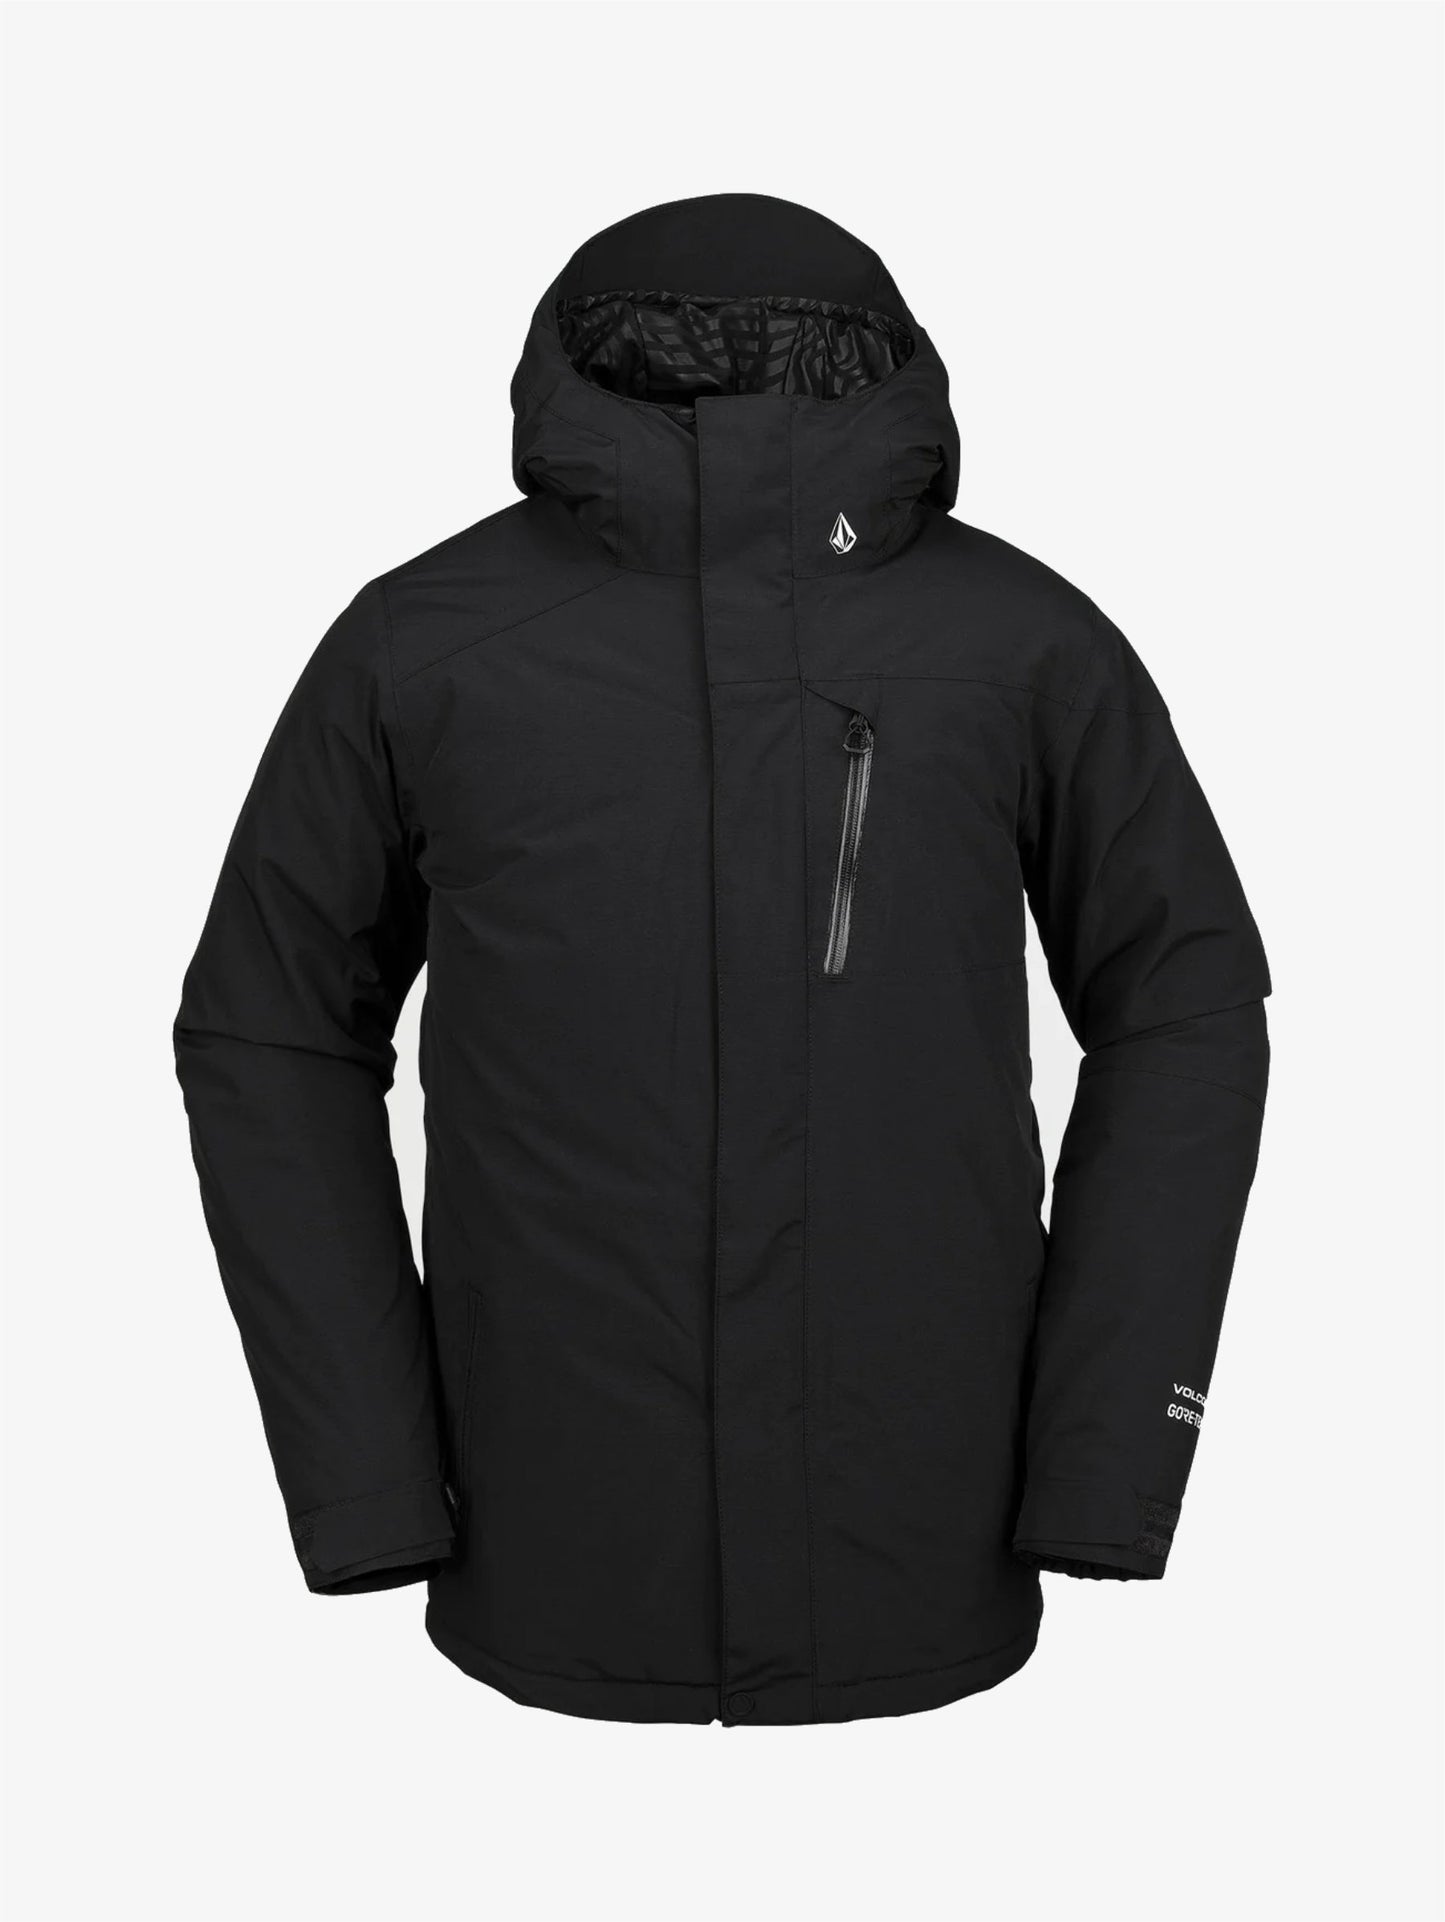 L Insulated Gore-Tex snowboard / ski jacket black